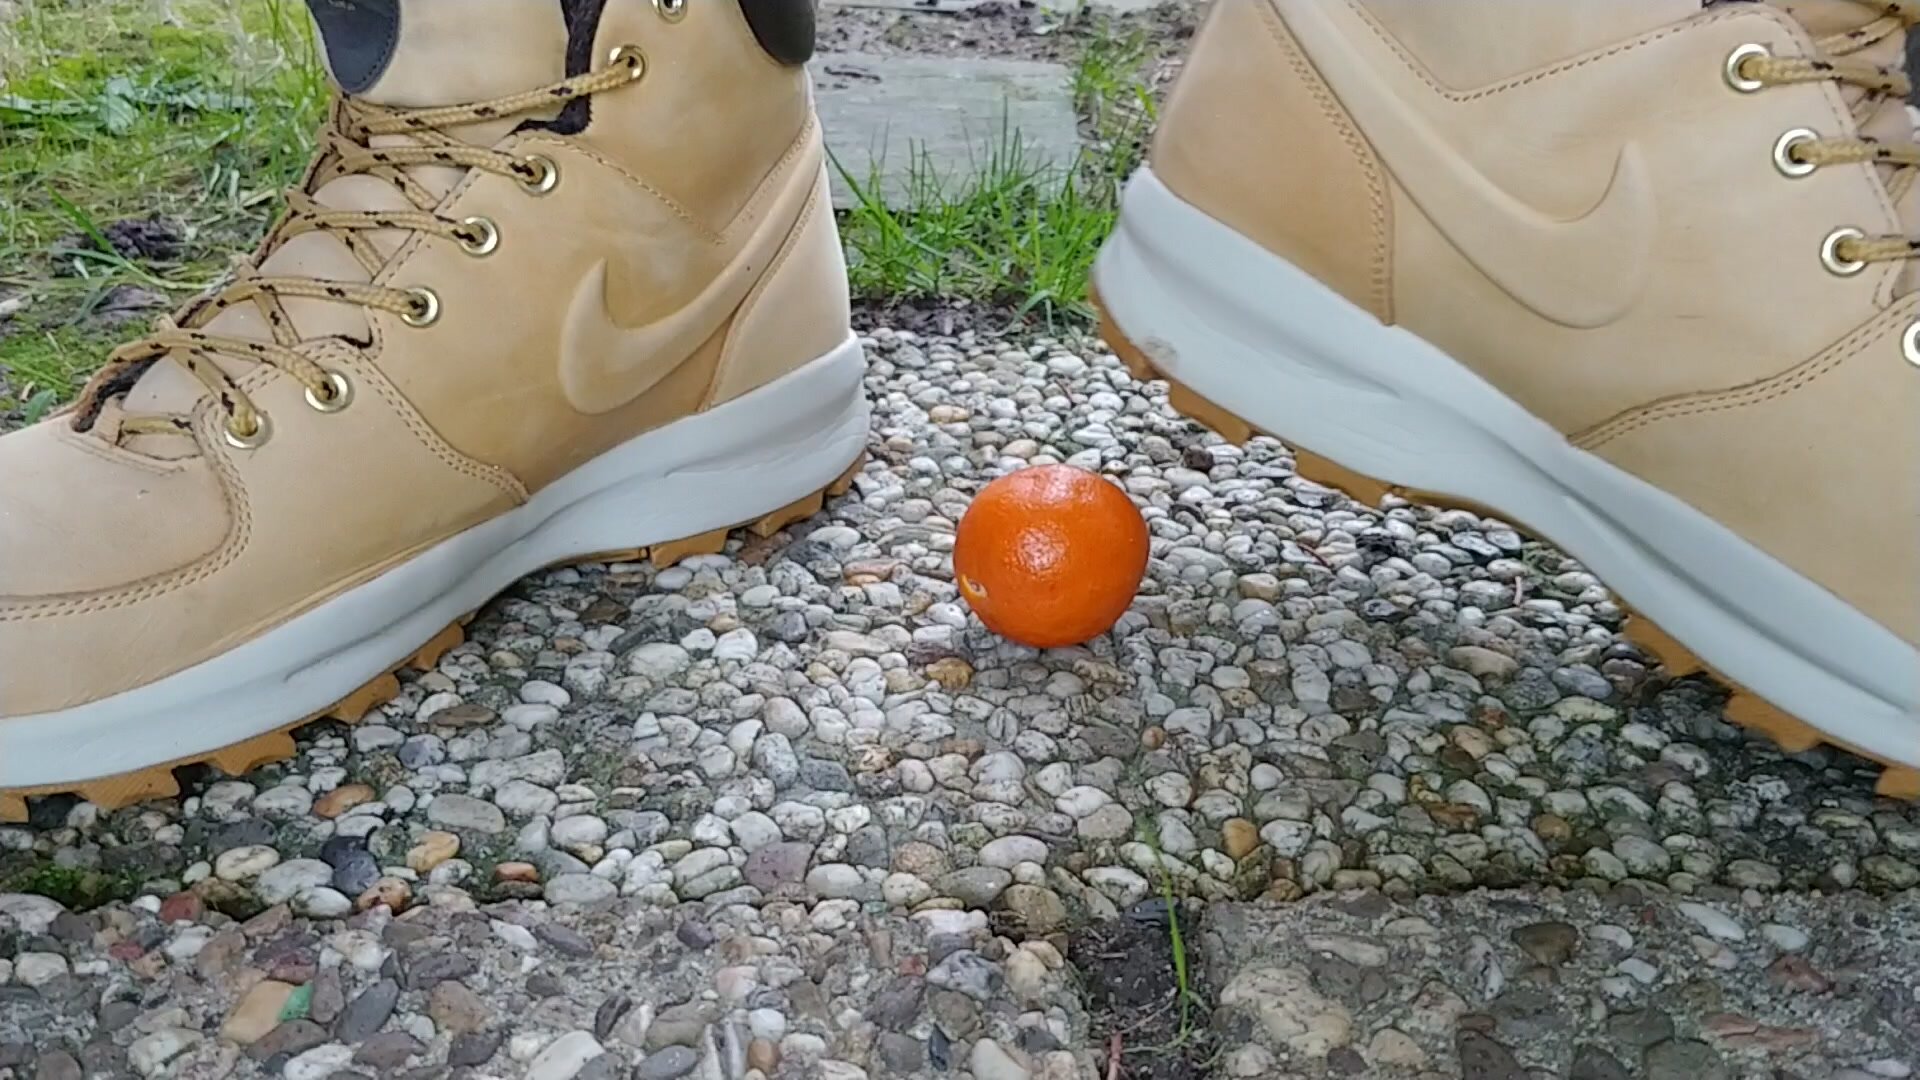 Nike boots crush fruit